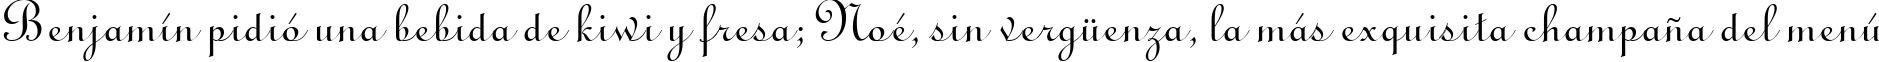 Пример написания шрифтом Typo Upright BT текста на испанском